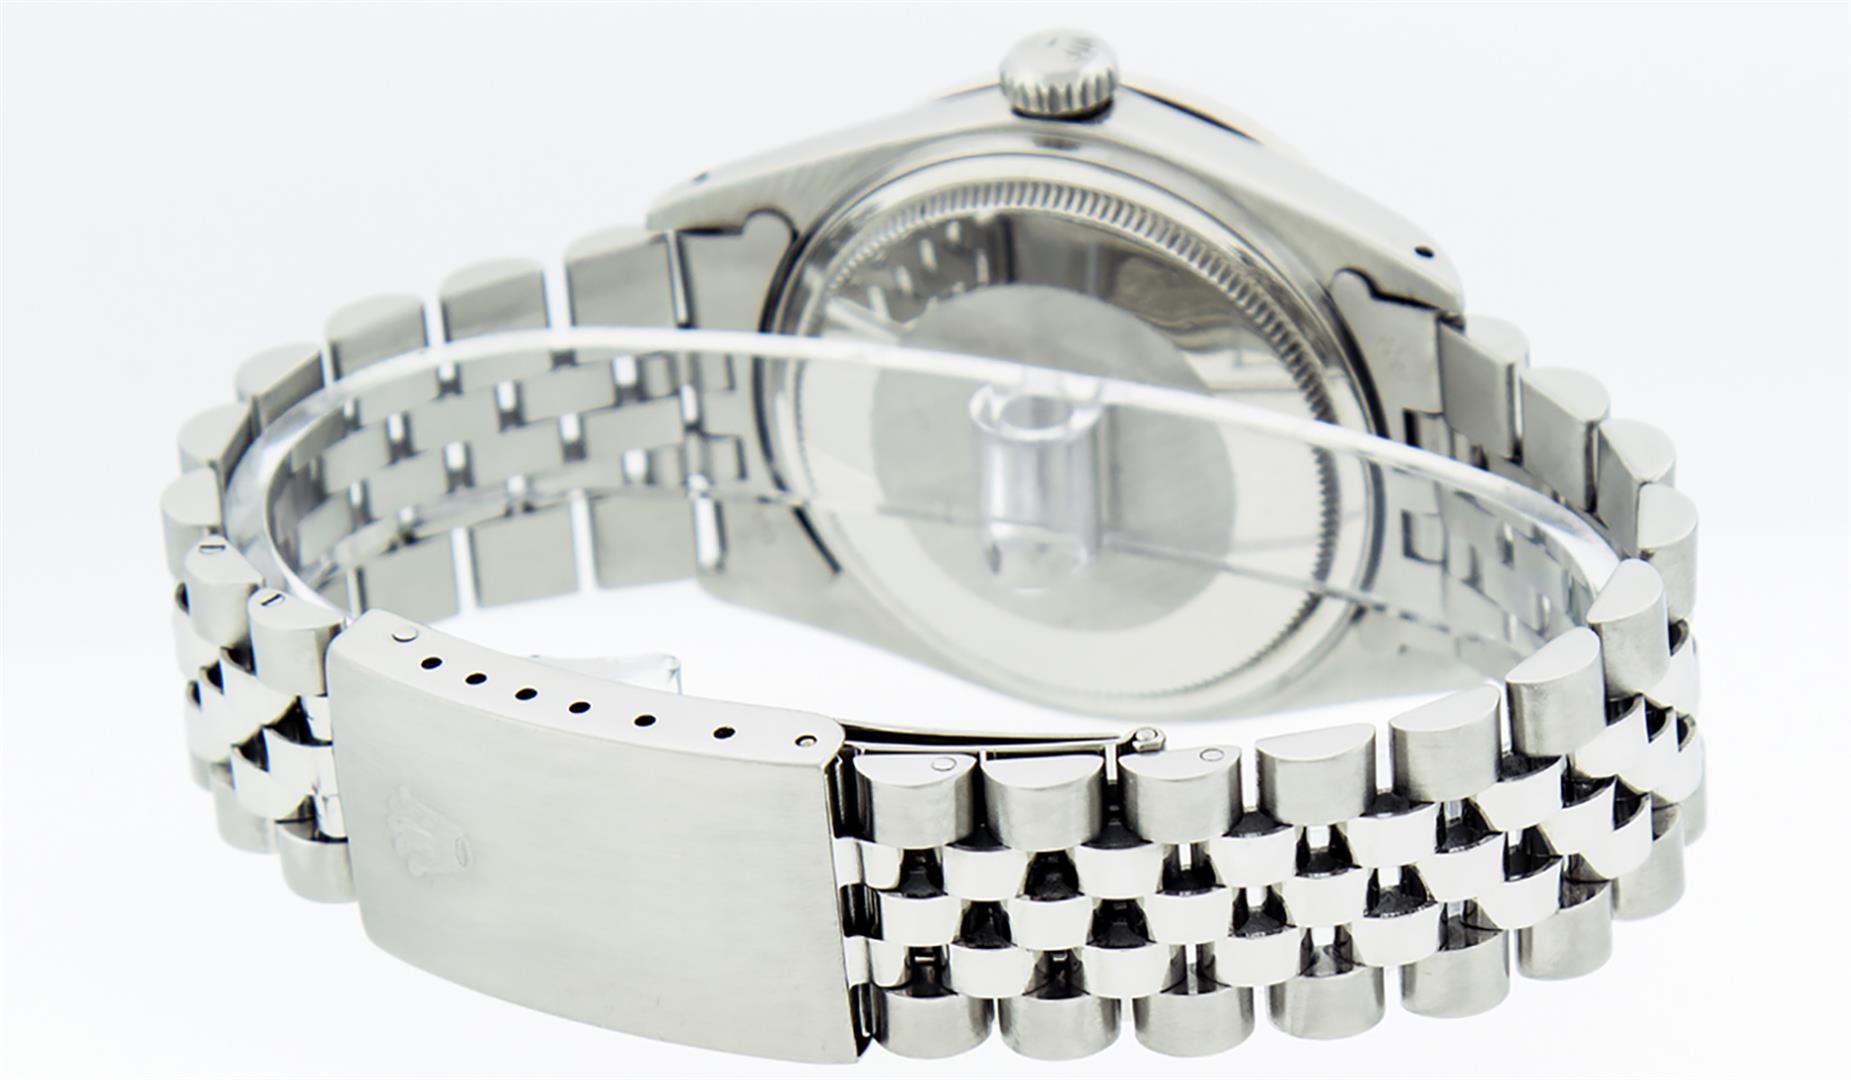 Rolex Mens Stainless Silver Diamond 36MM Datejust Wristwatch